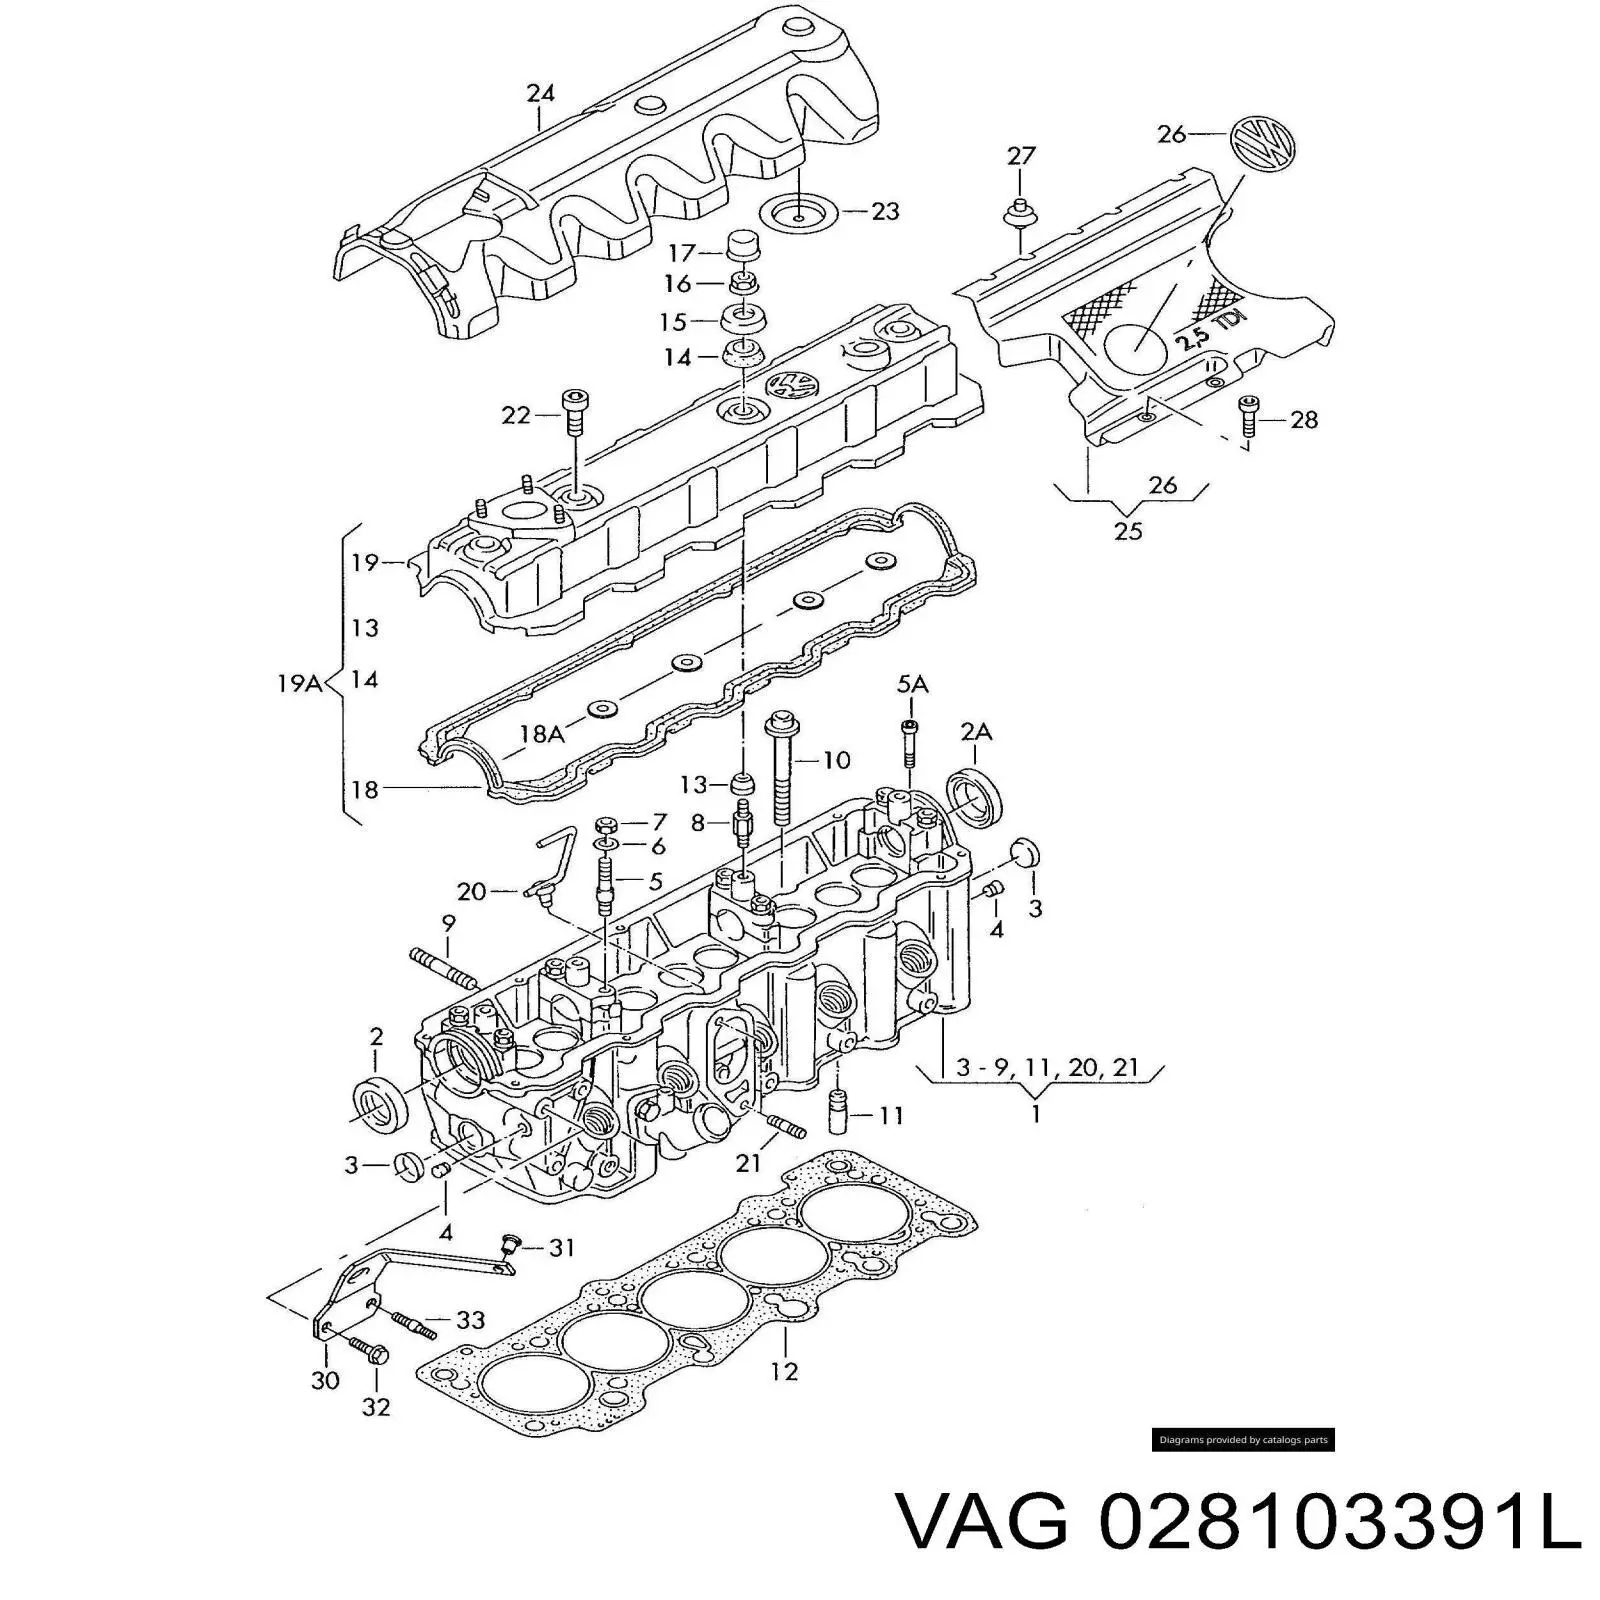 028103391L VAG motor diesel com turbocompressor